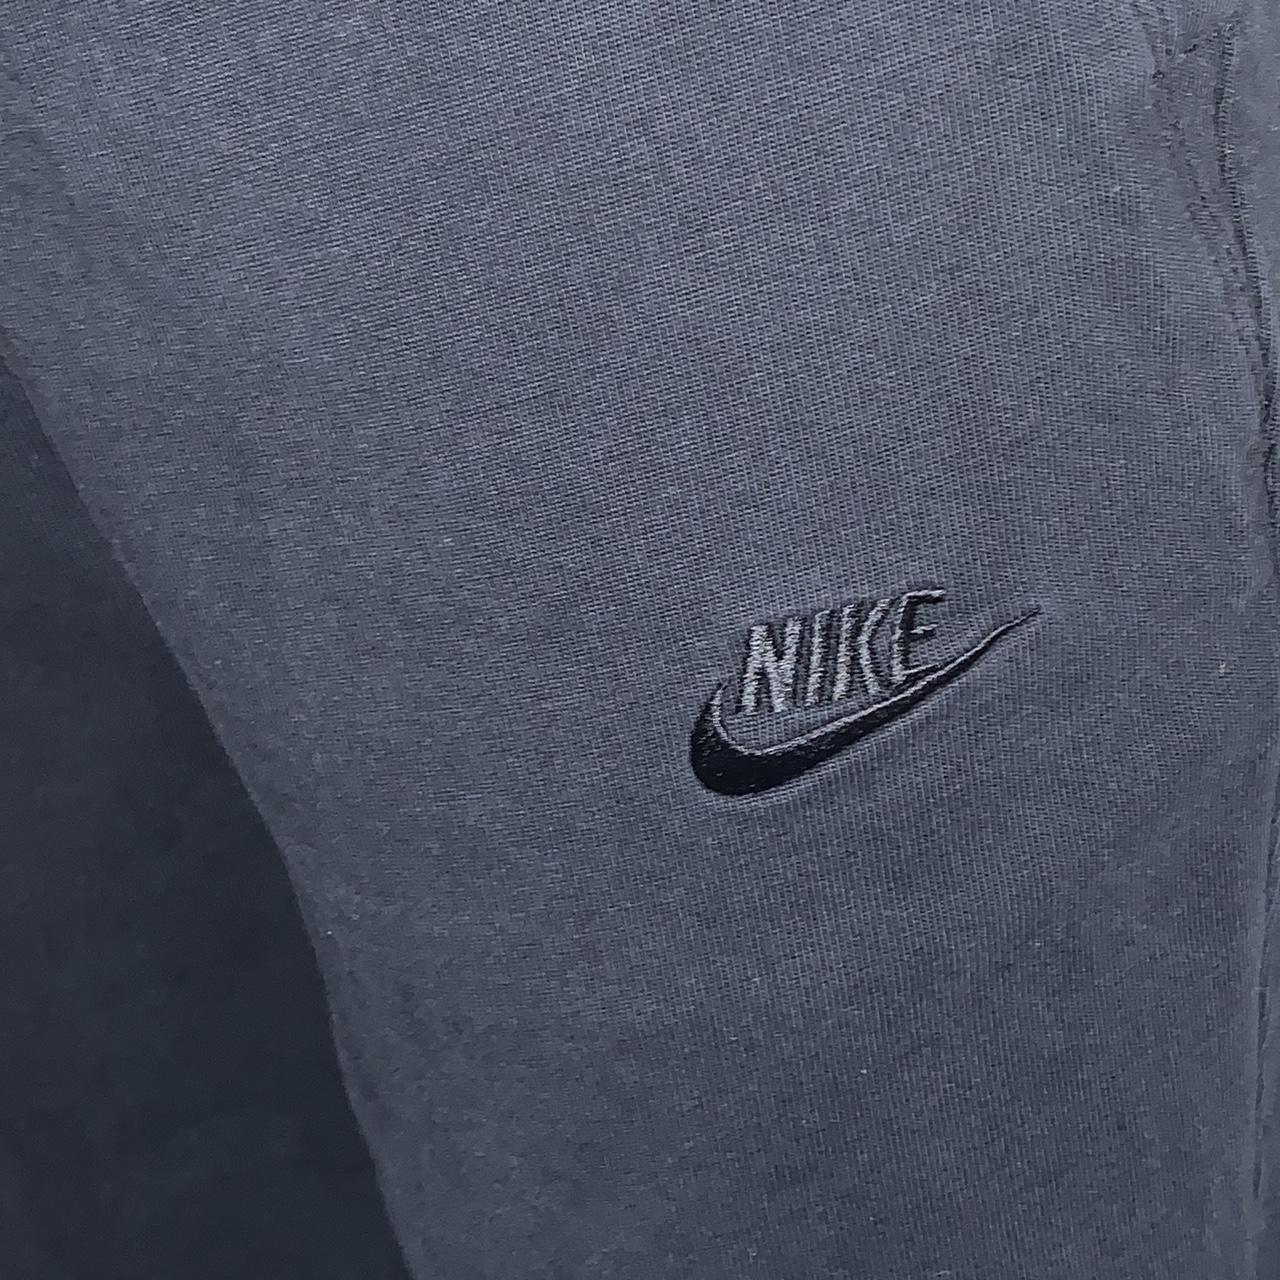 Black Nike sweatpants/joggers - Depop